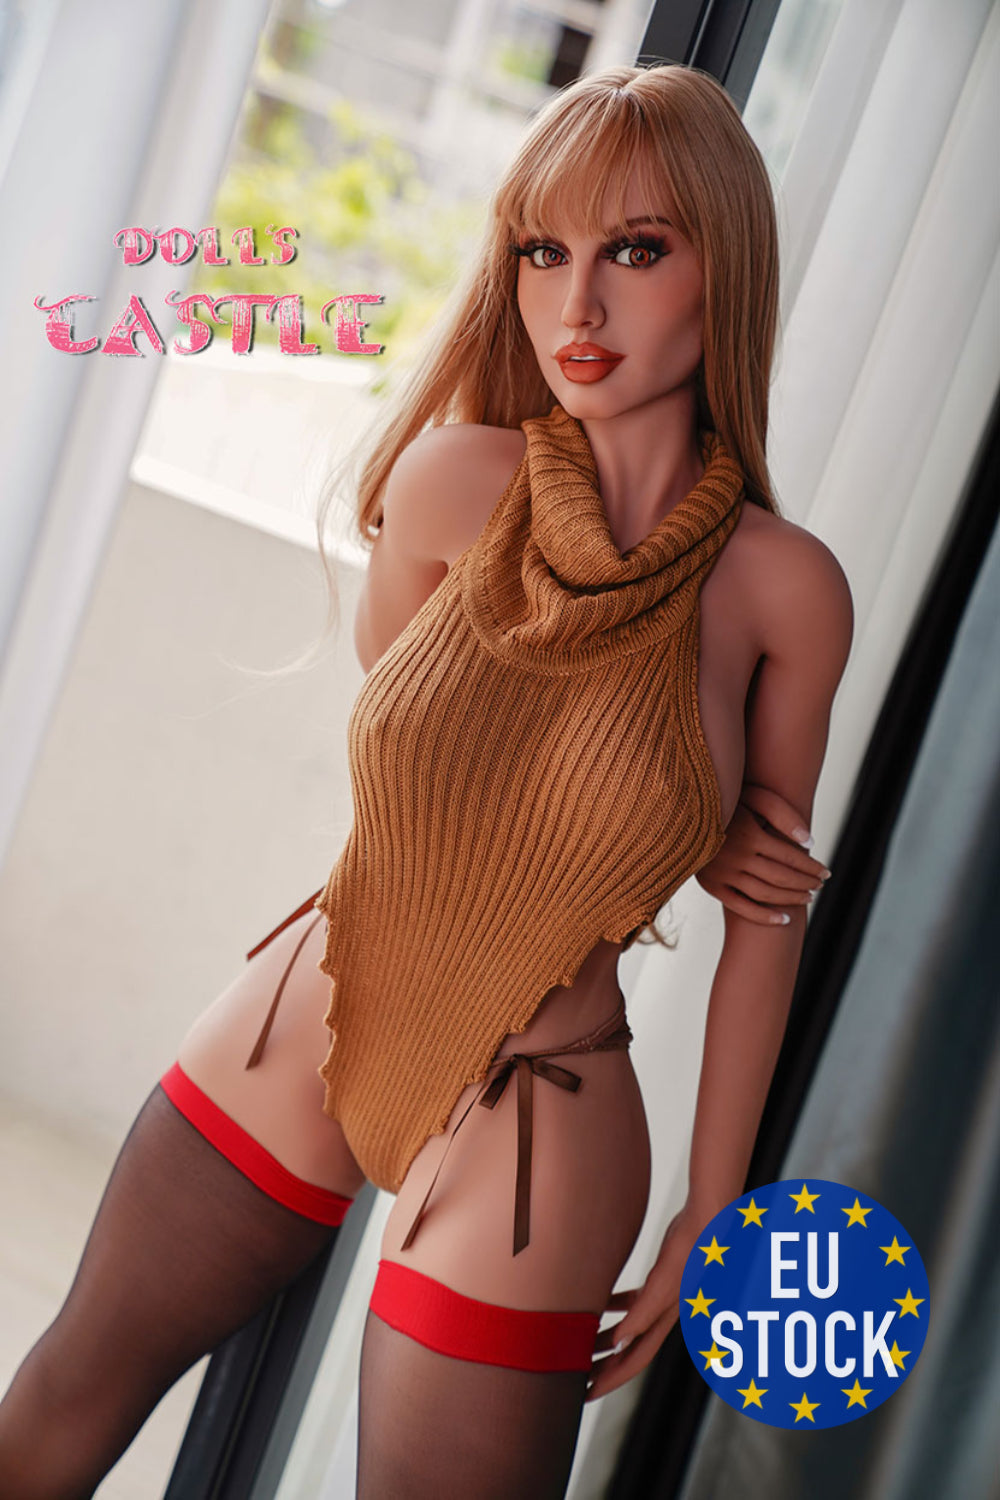 Doll's Castle 153 cm E TPE - #196 (EU) | Buy Sex Dolls at DOLLS ACTUALLY